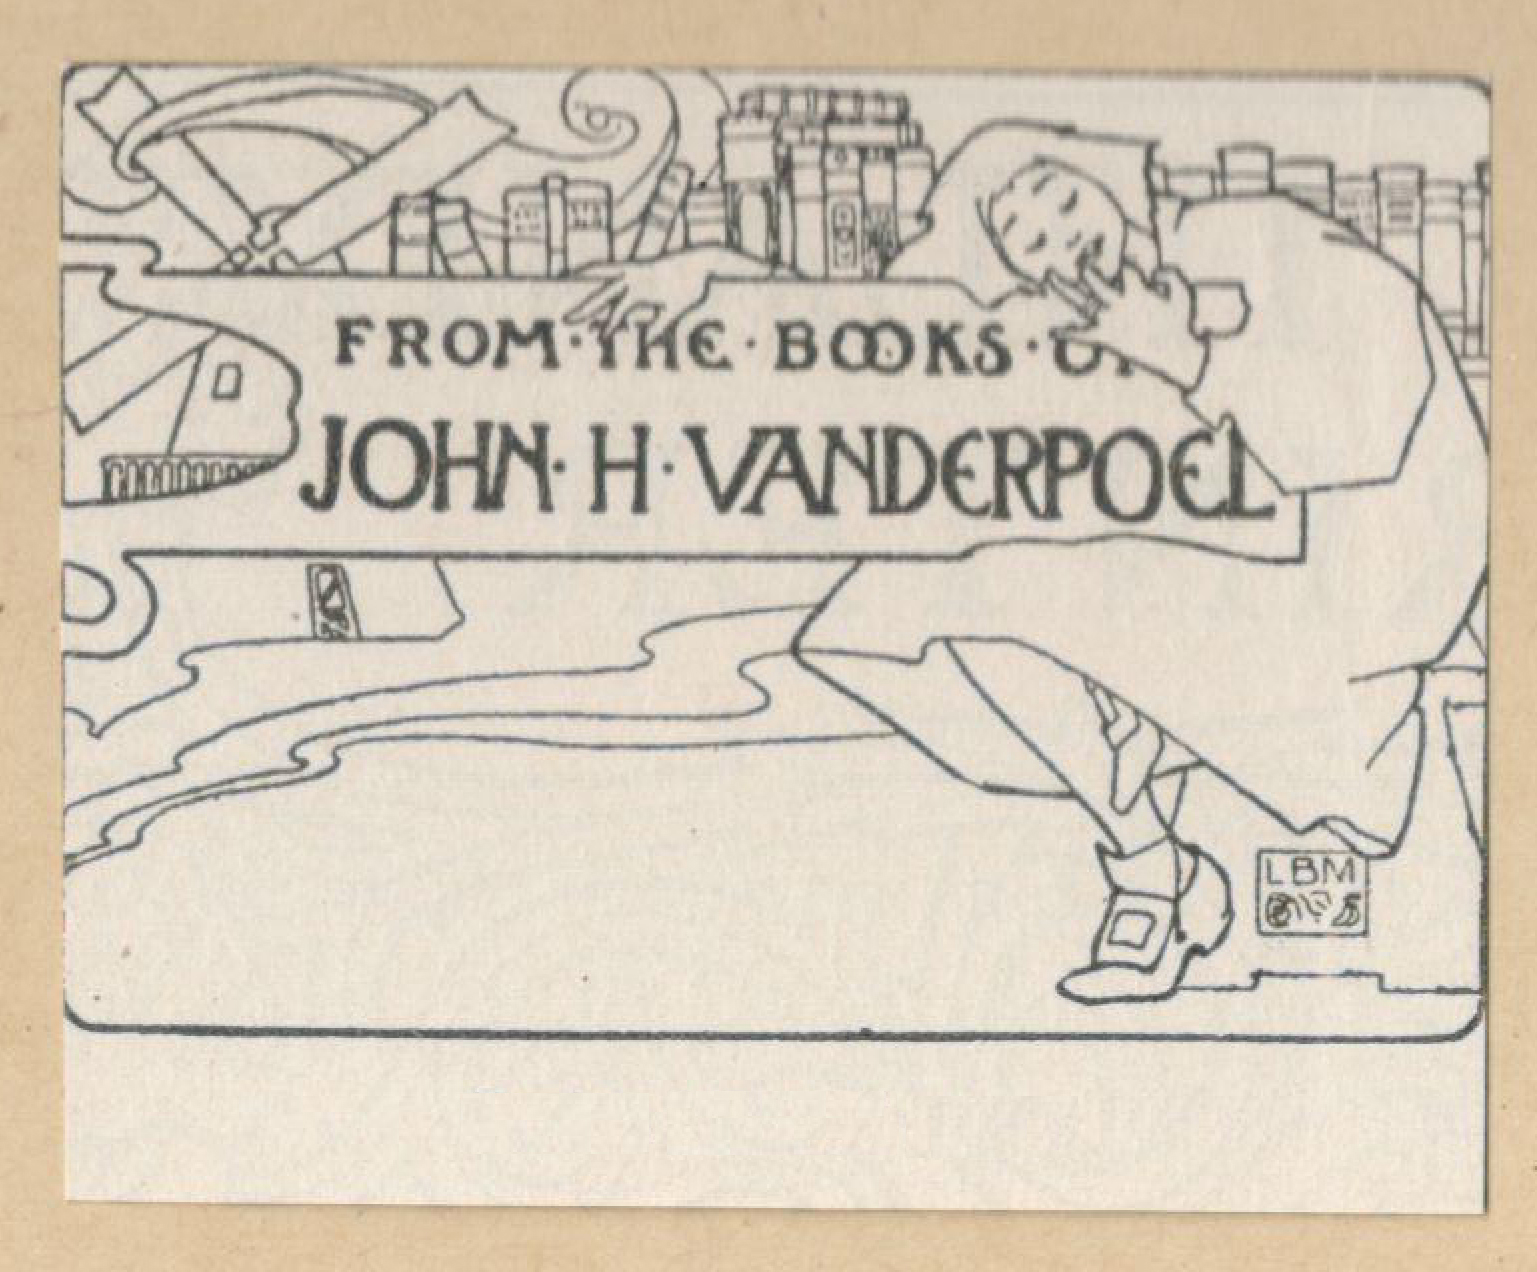 Bookplate of John H. Vanderpoel